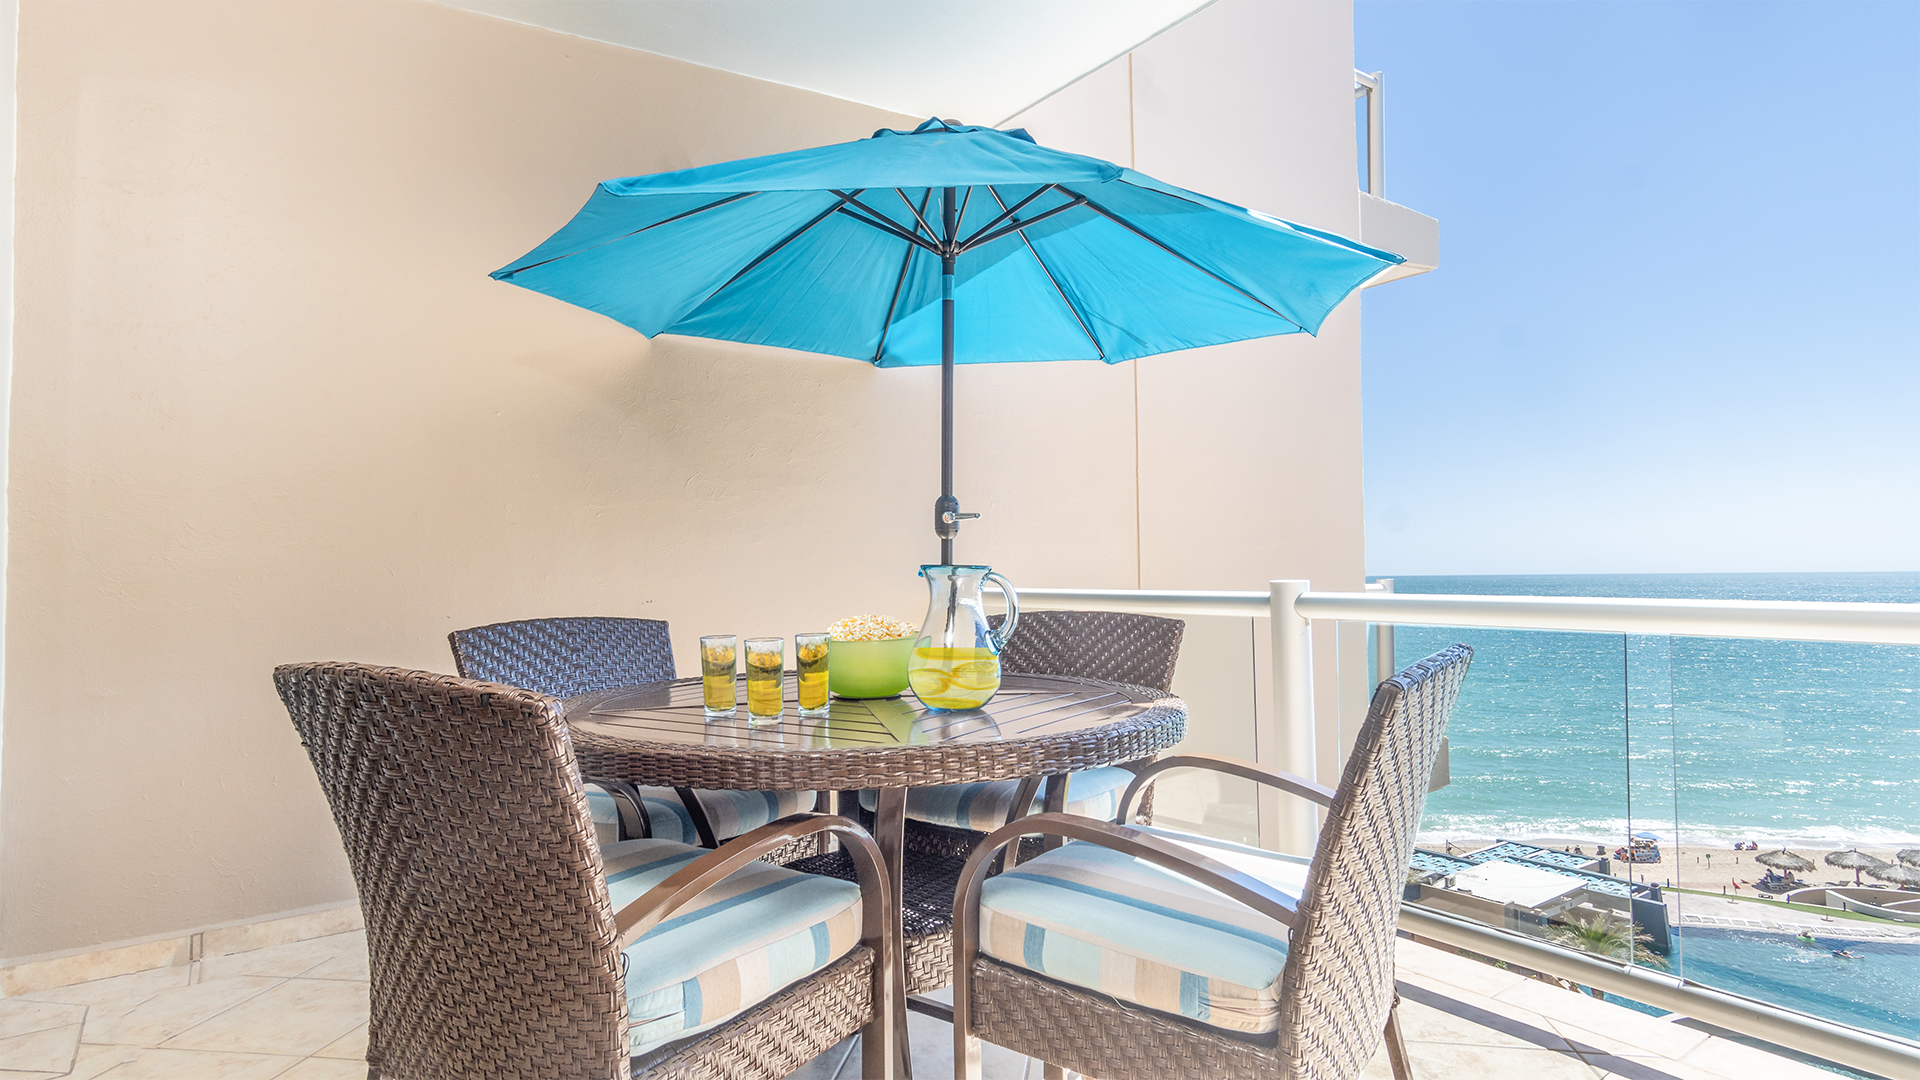 Balcony dining table with sun umbrella